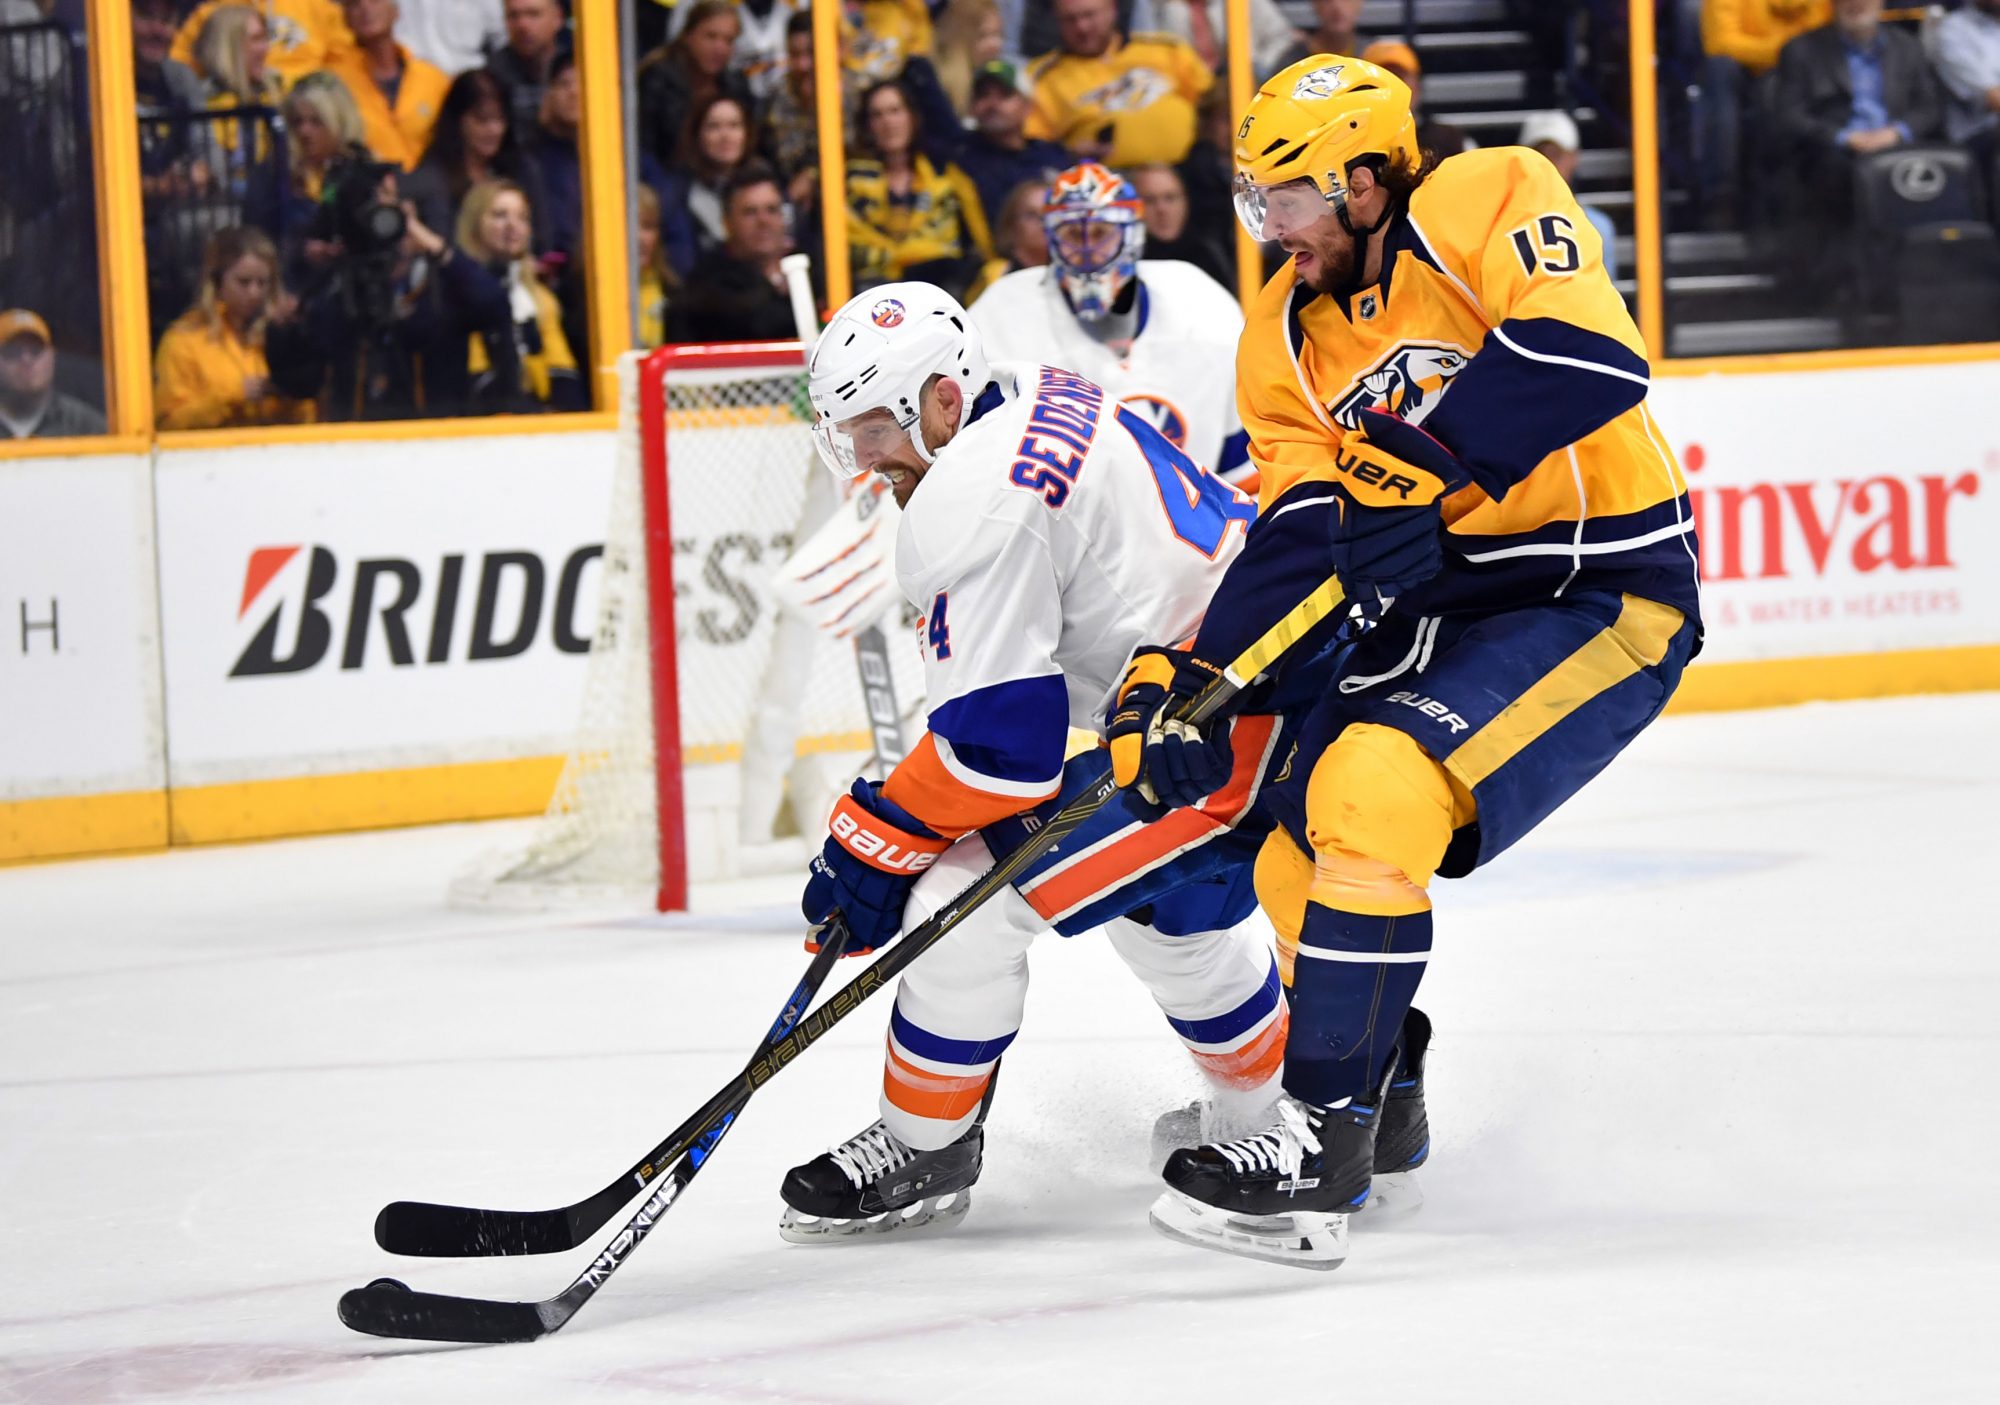 New York Islanders Extend Season With Overtime Win Over Predators 